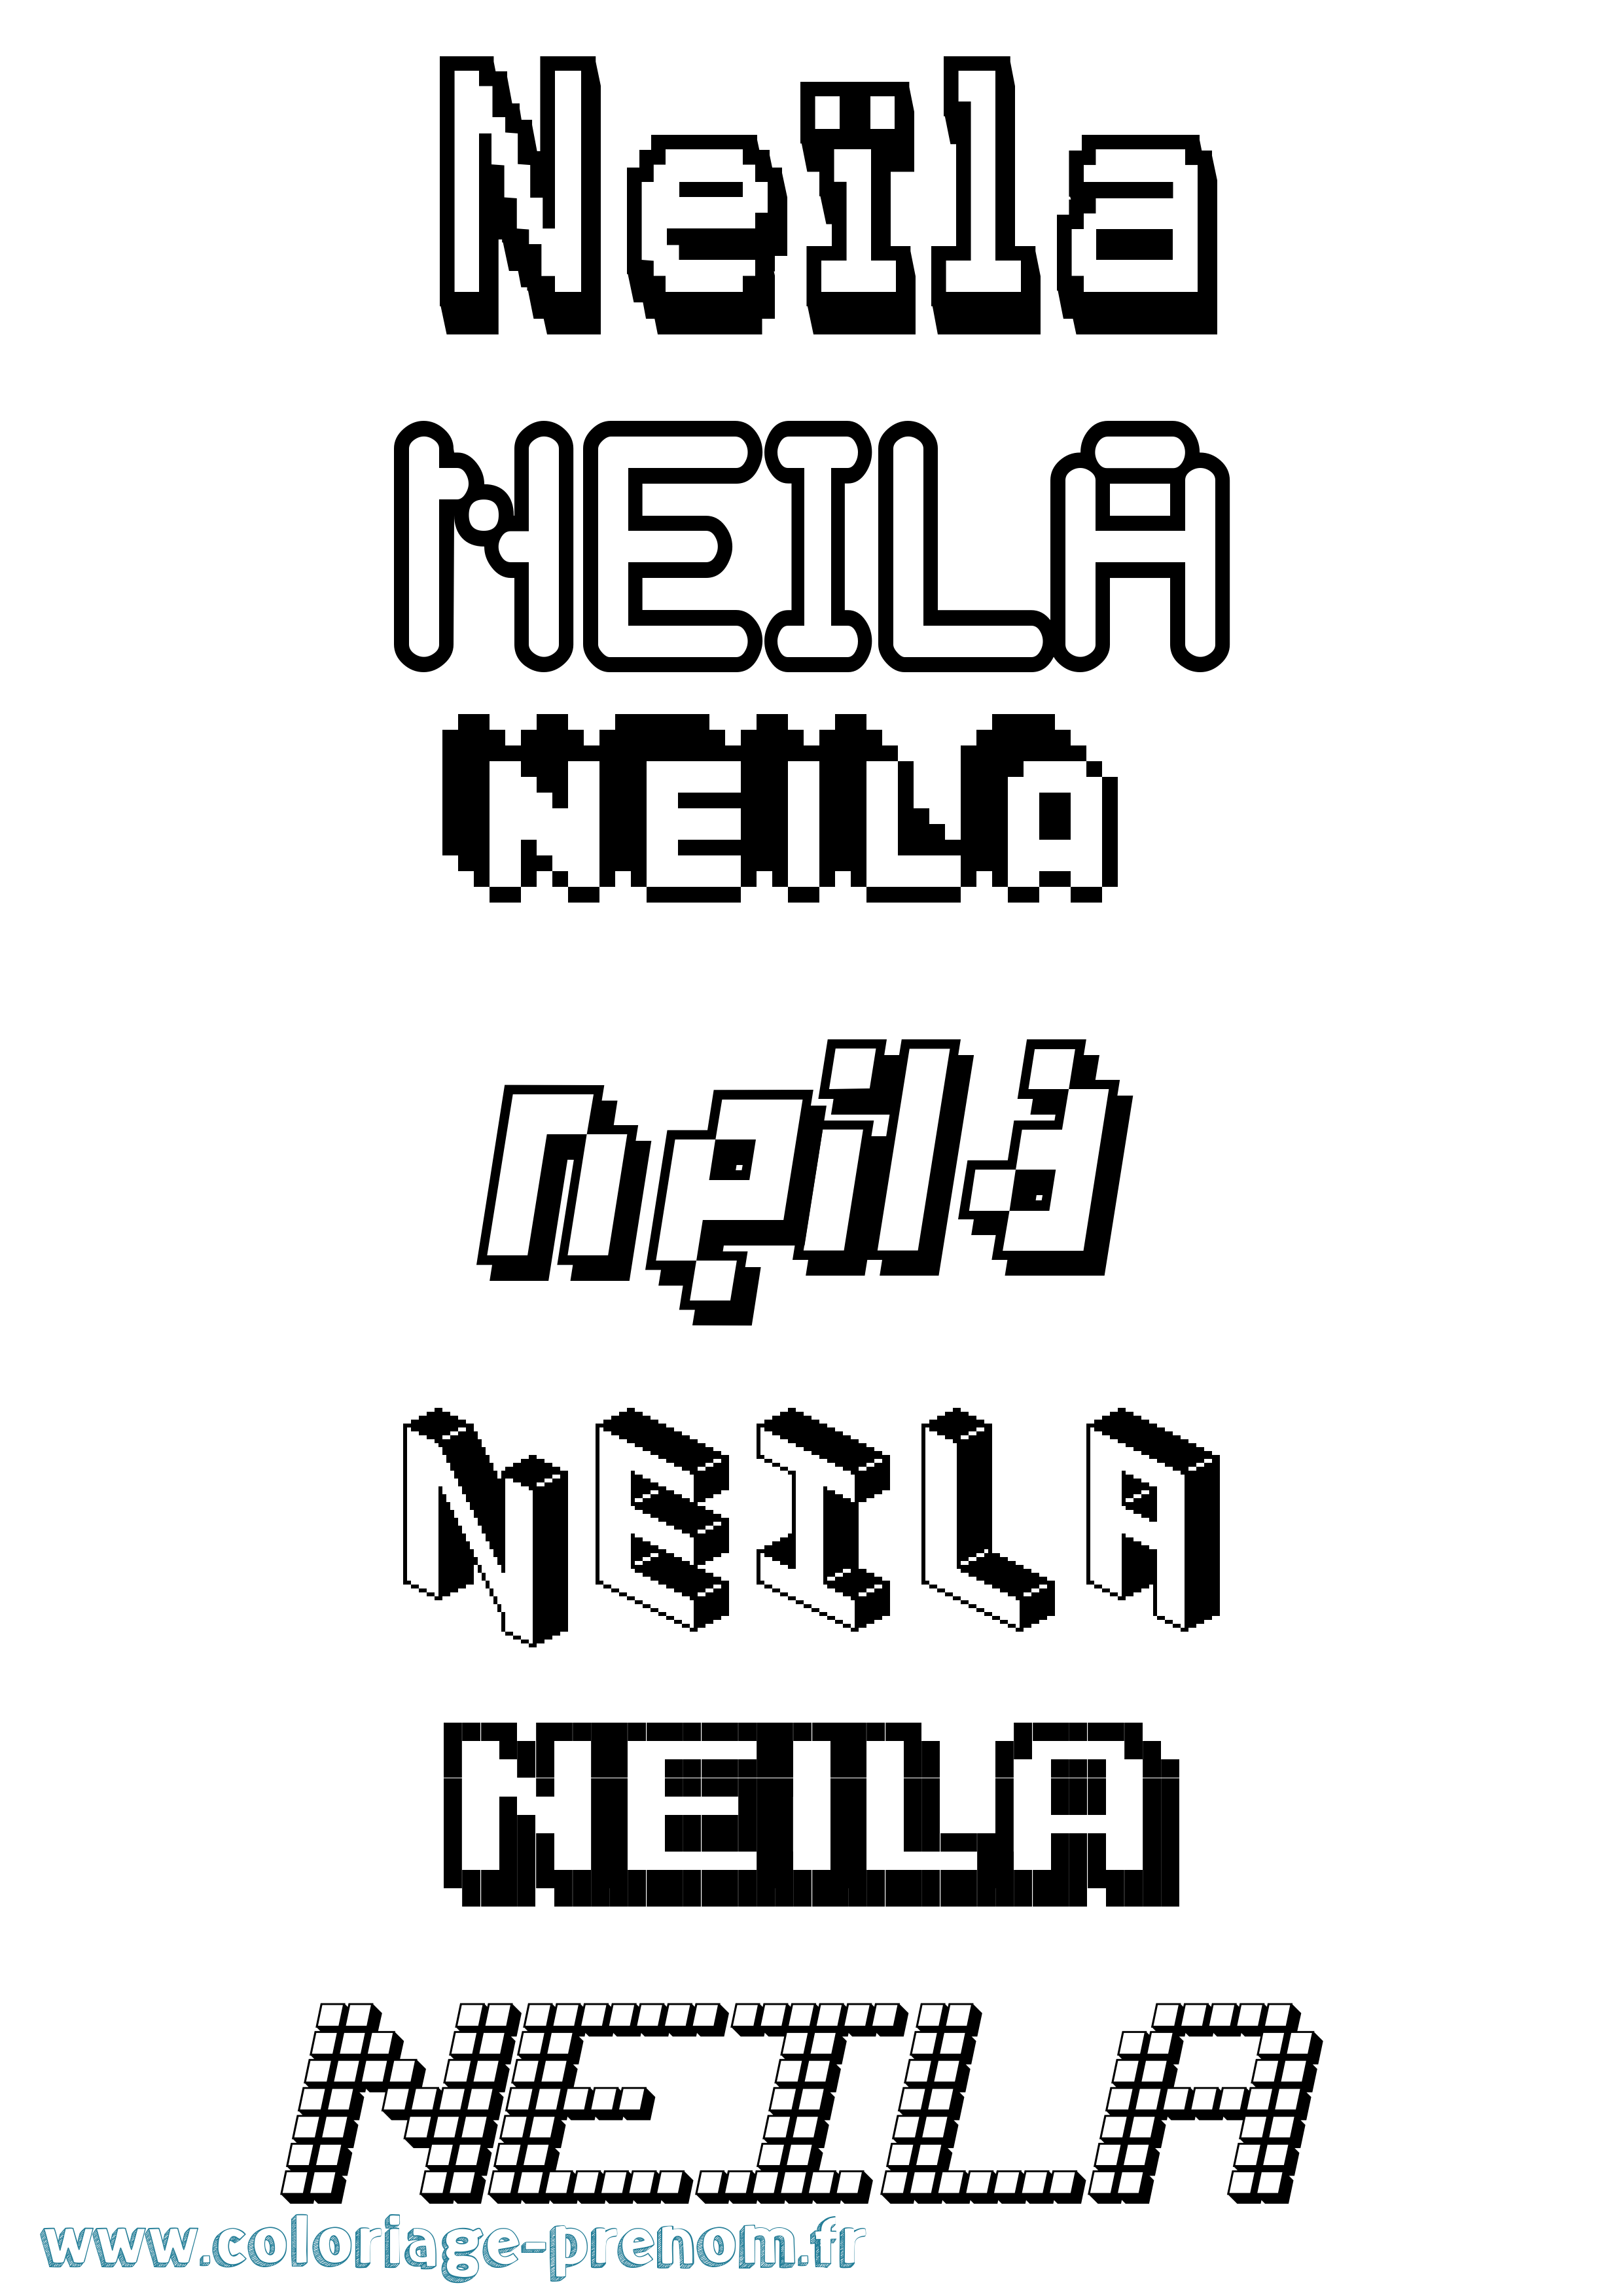 Coloriage prénom Neïla Pixel